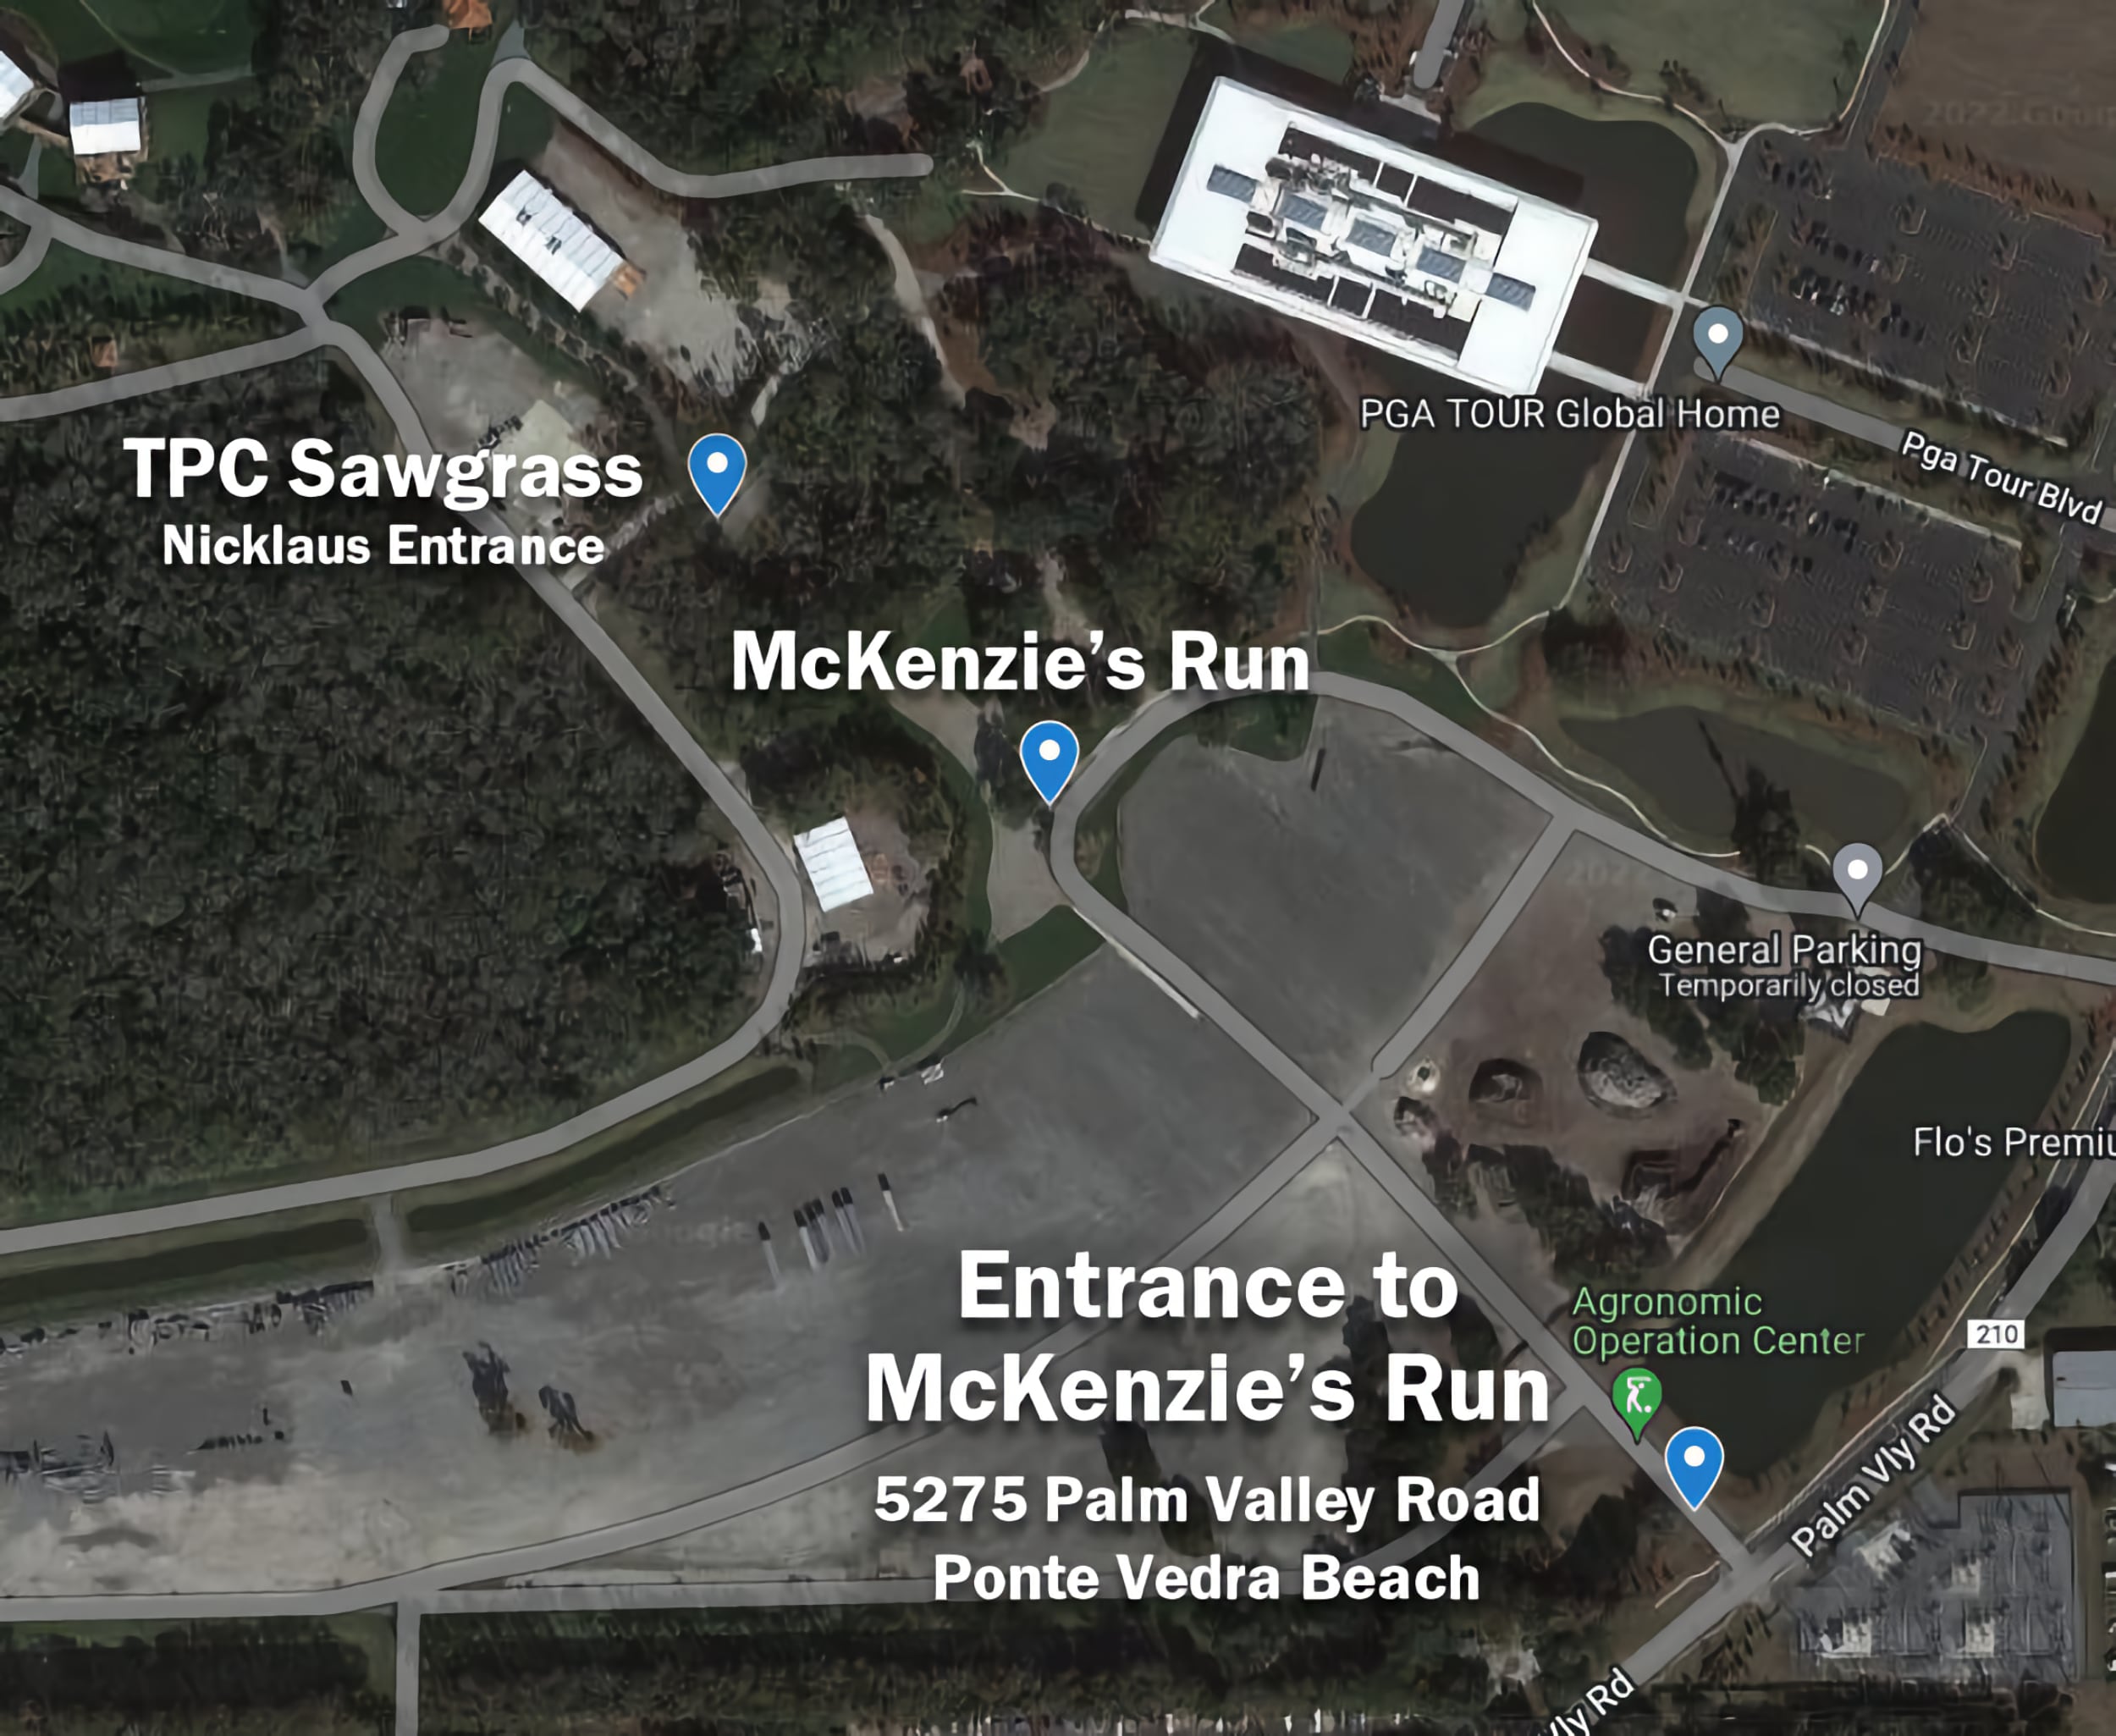 Parking map for the McKenzie Run at TPC Sawgrass in Ponte Vedra Beach